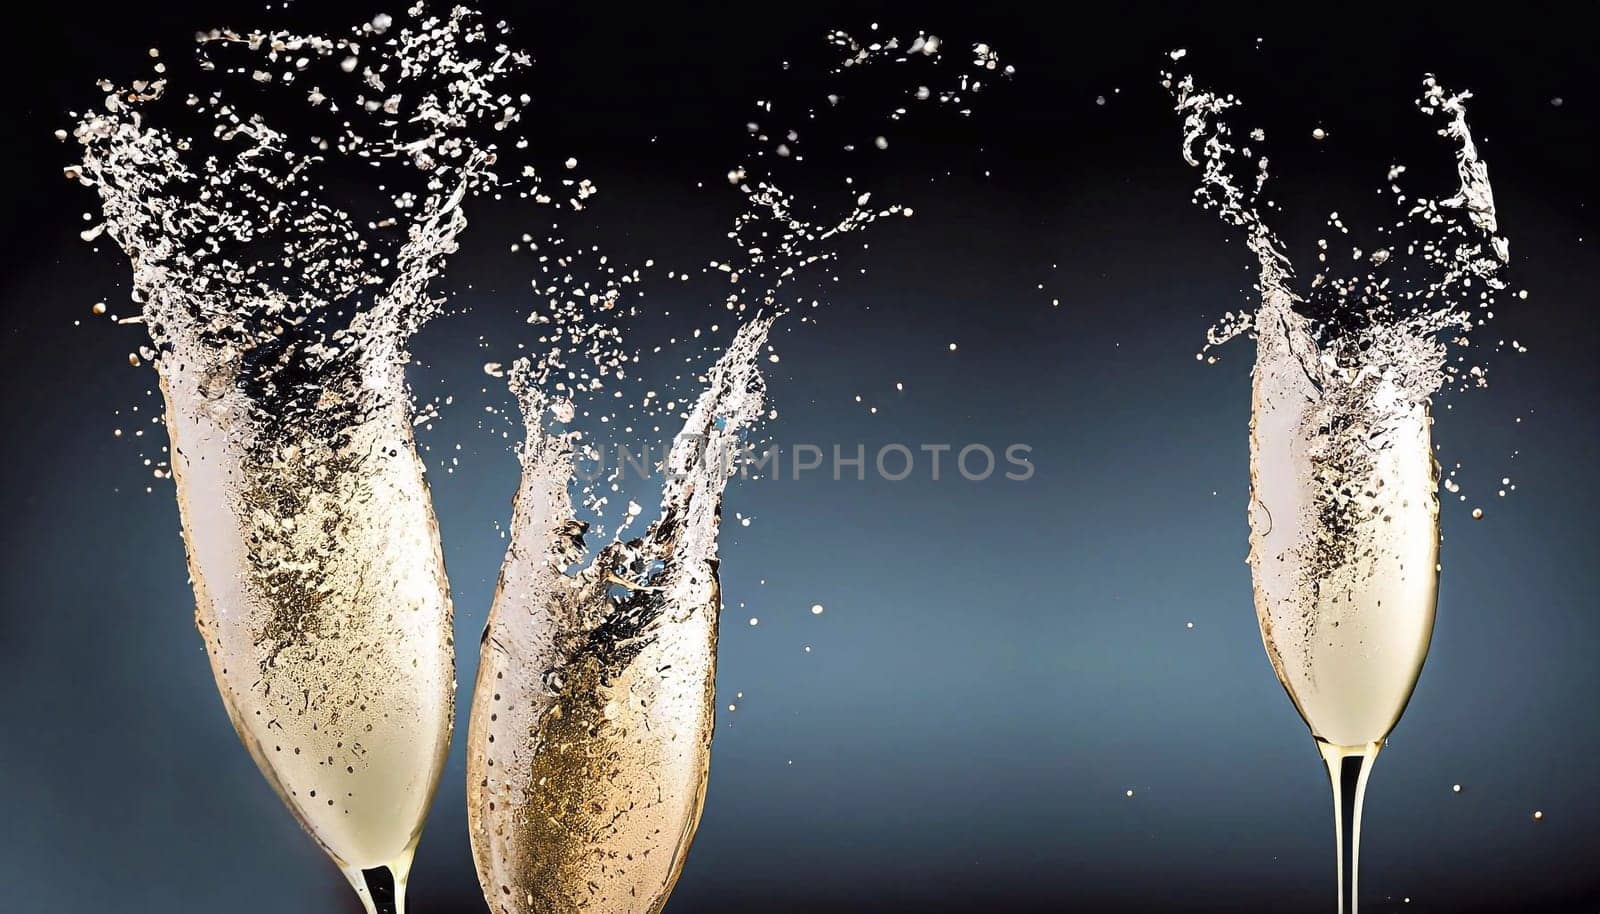 Celebration theme with splashing champagne